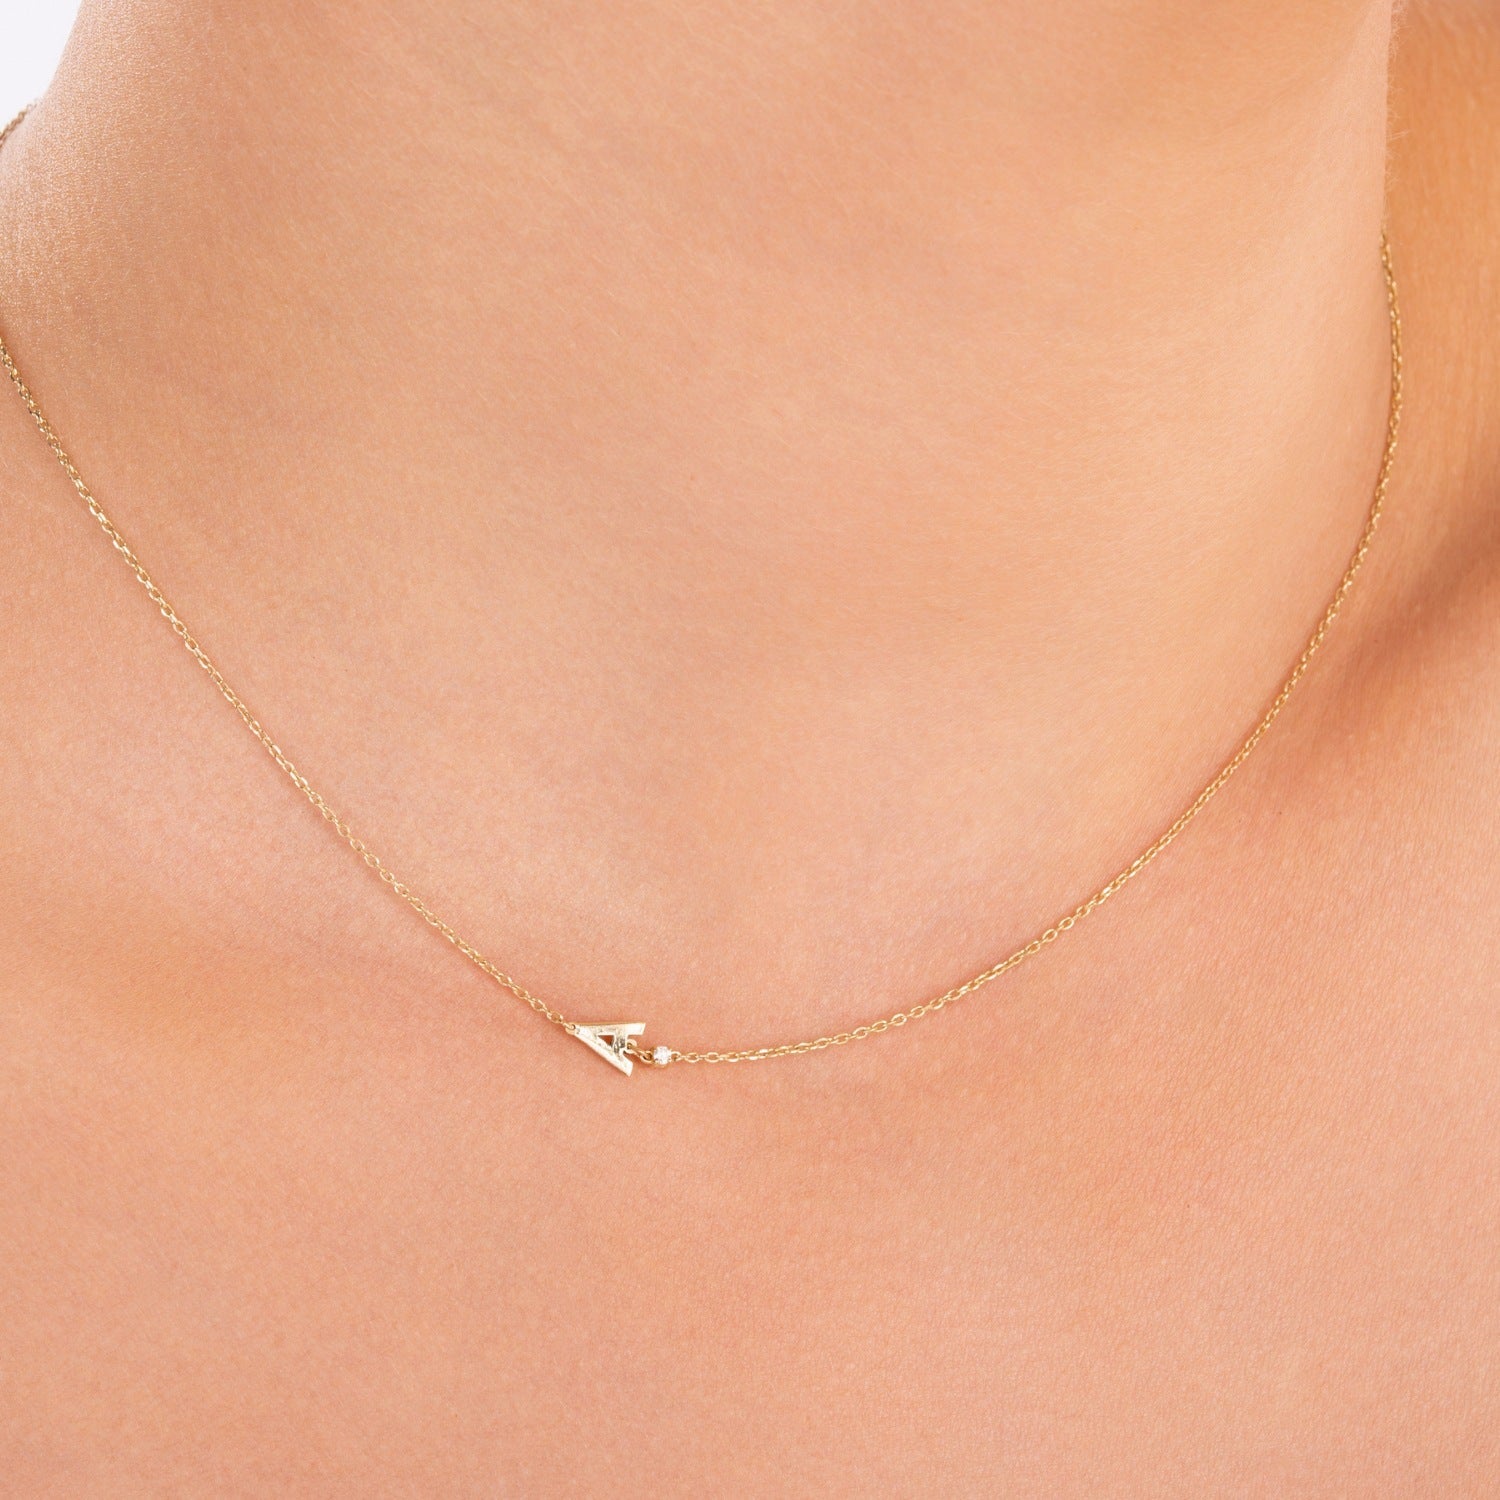 Sideways Initial Q Necklace with Diamond